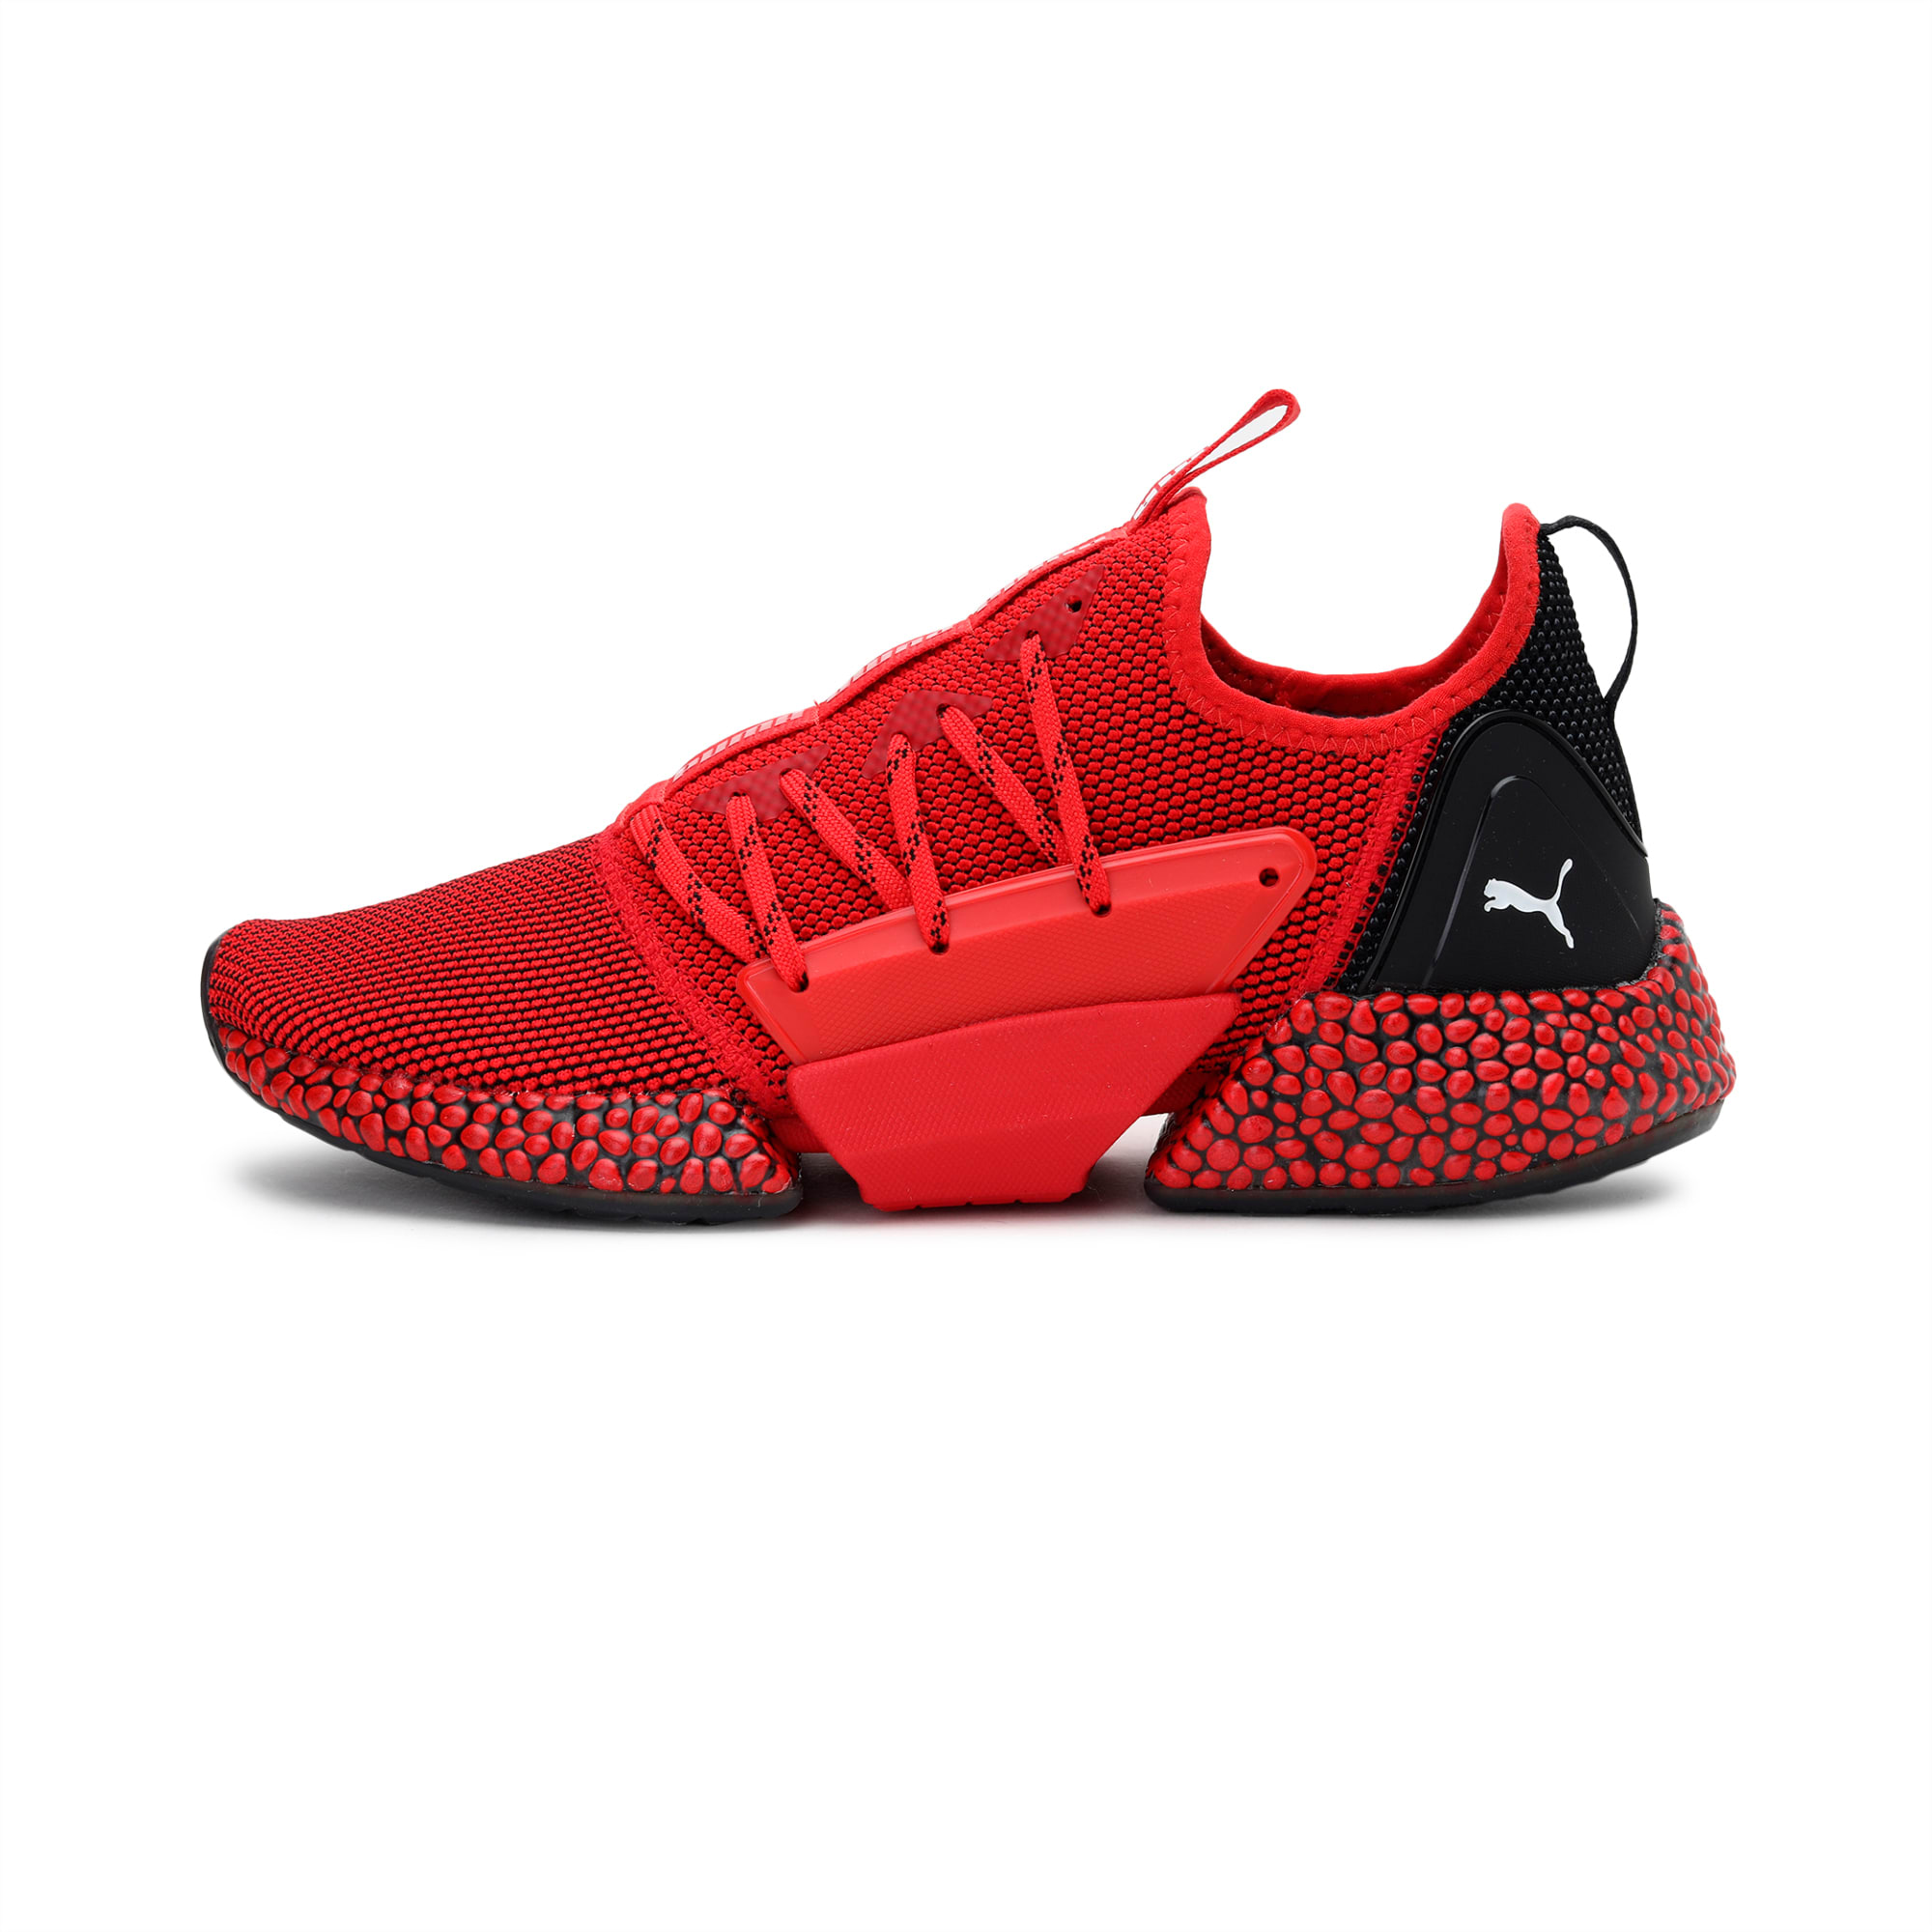 puma fur shoes red